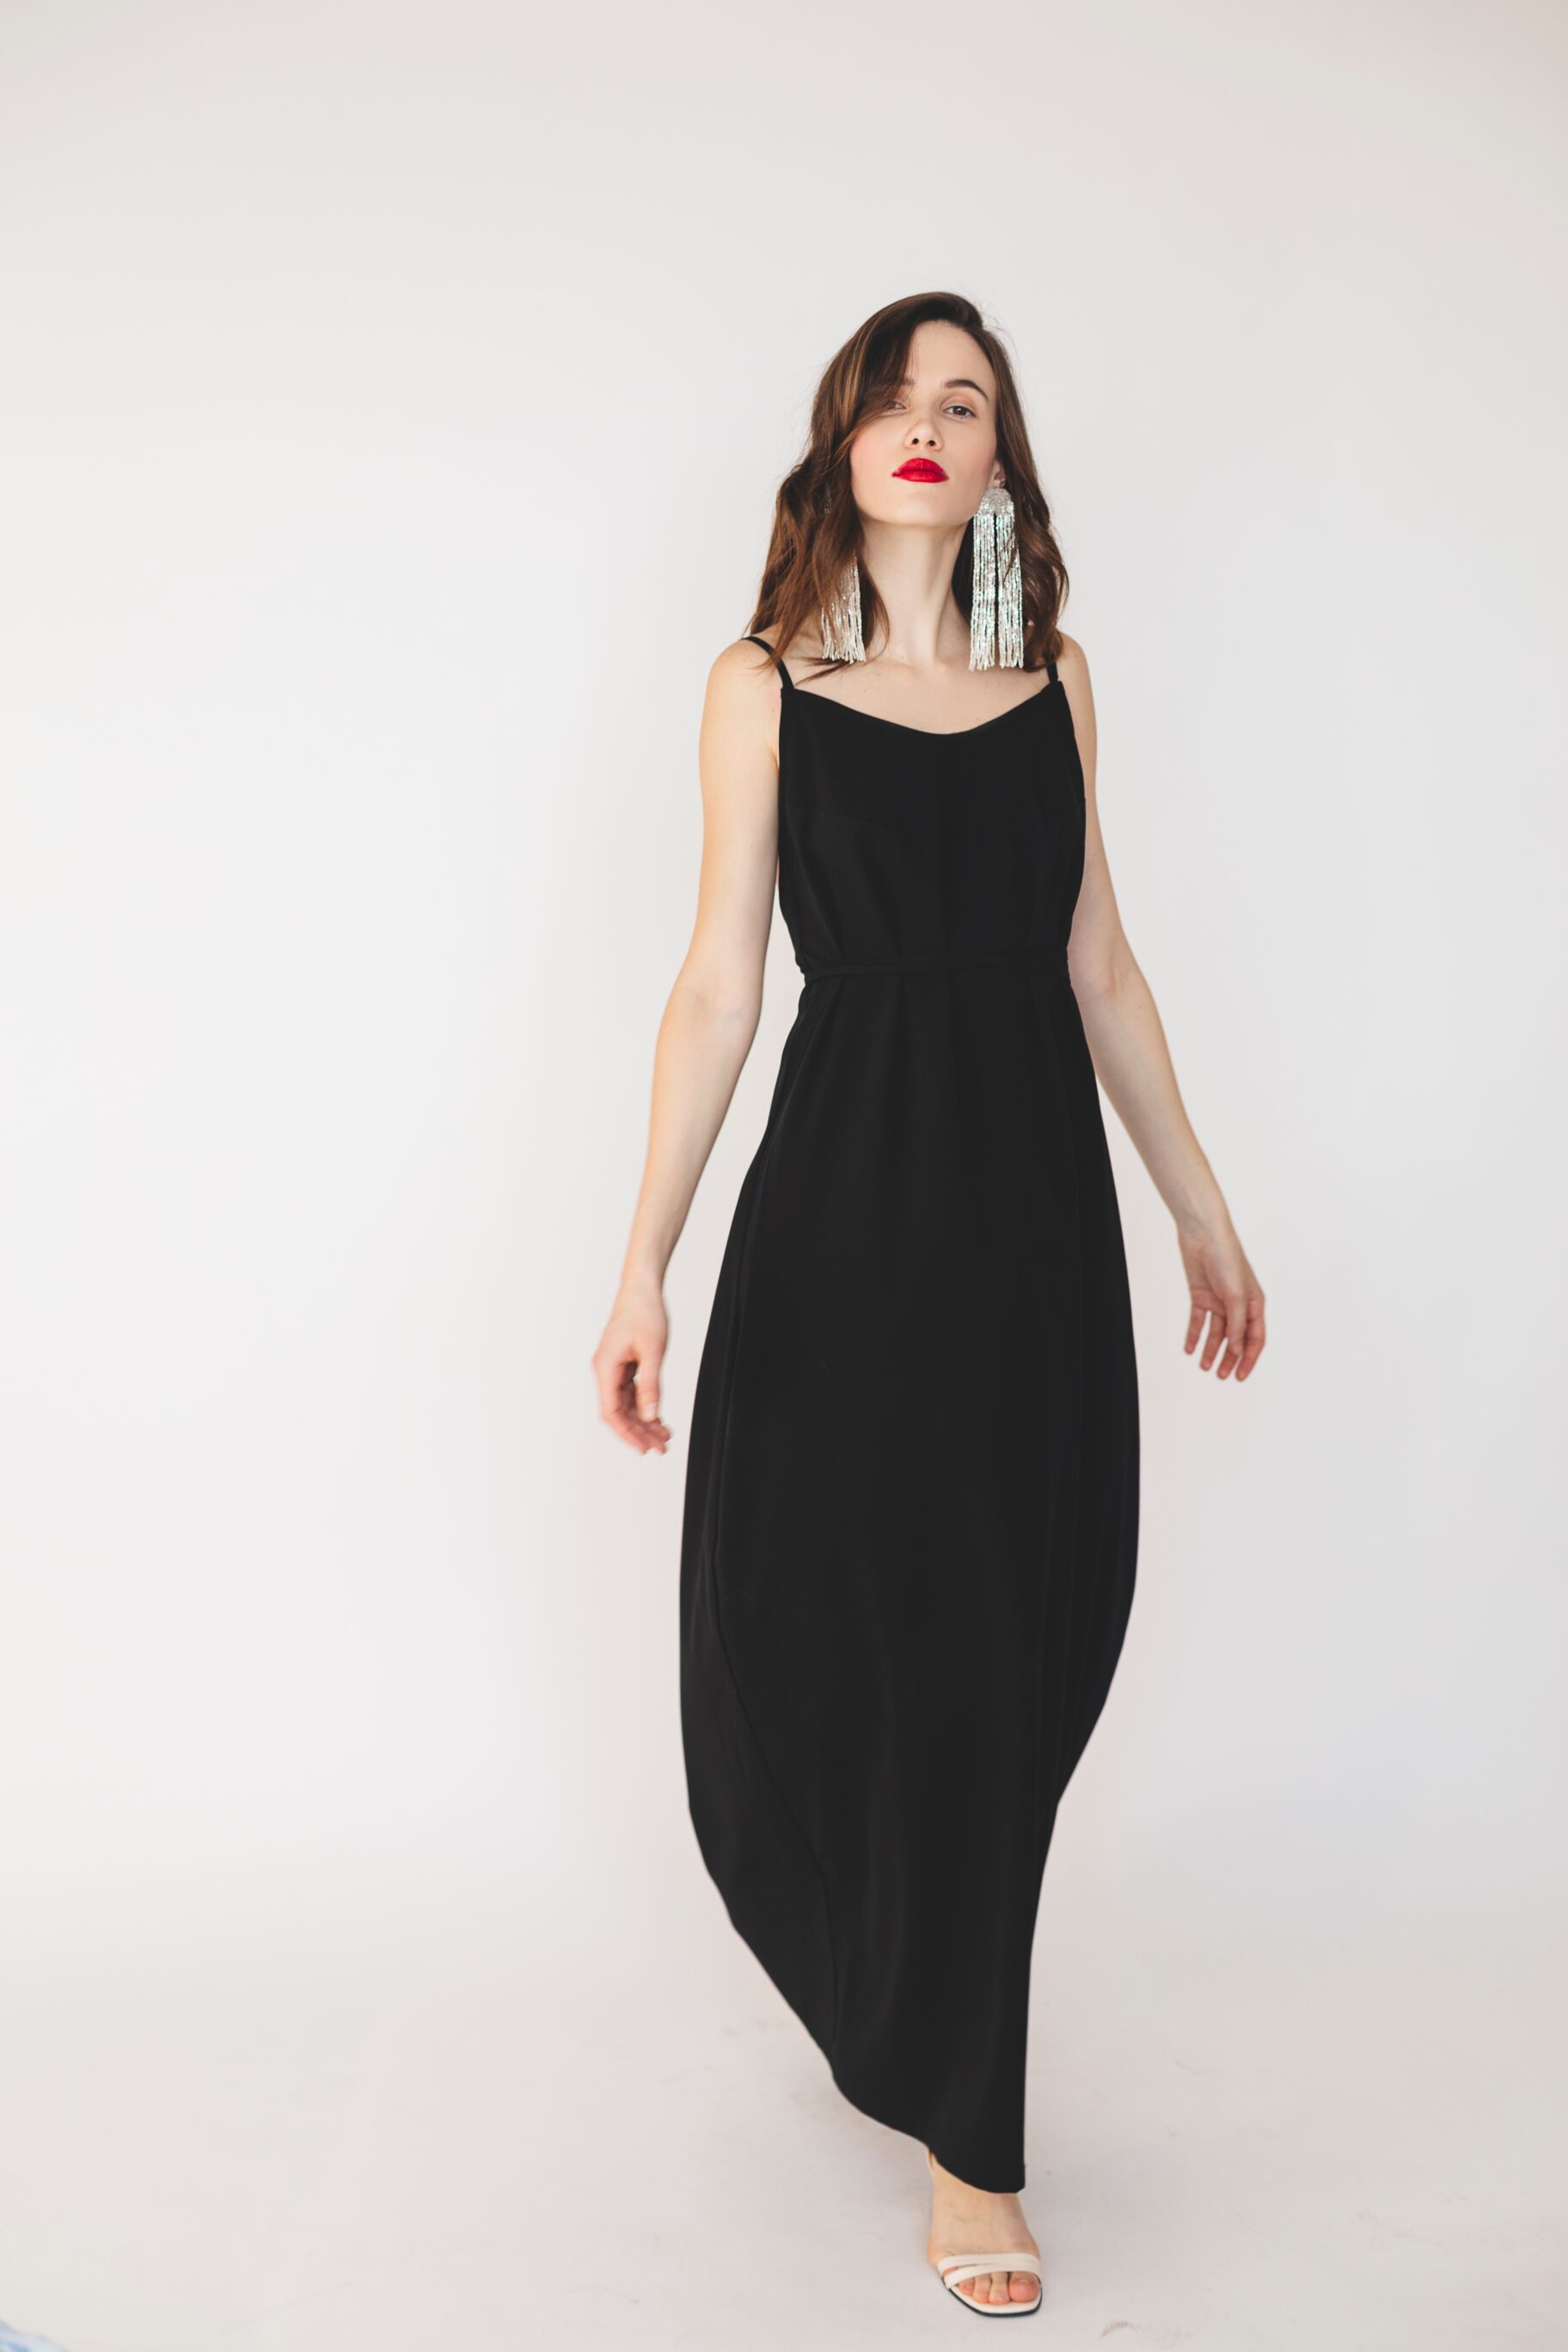 2-wire Black Dress